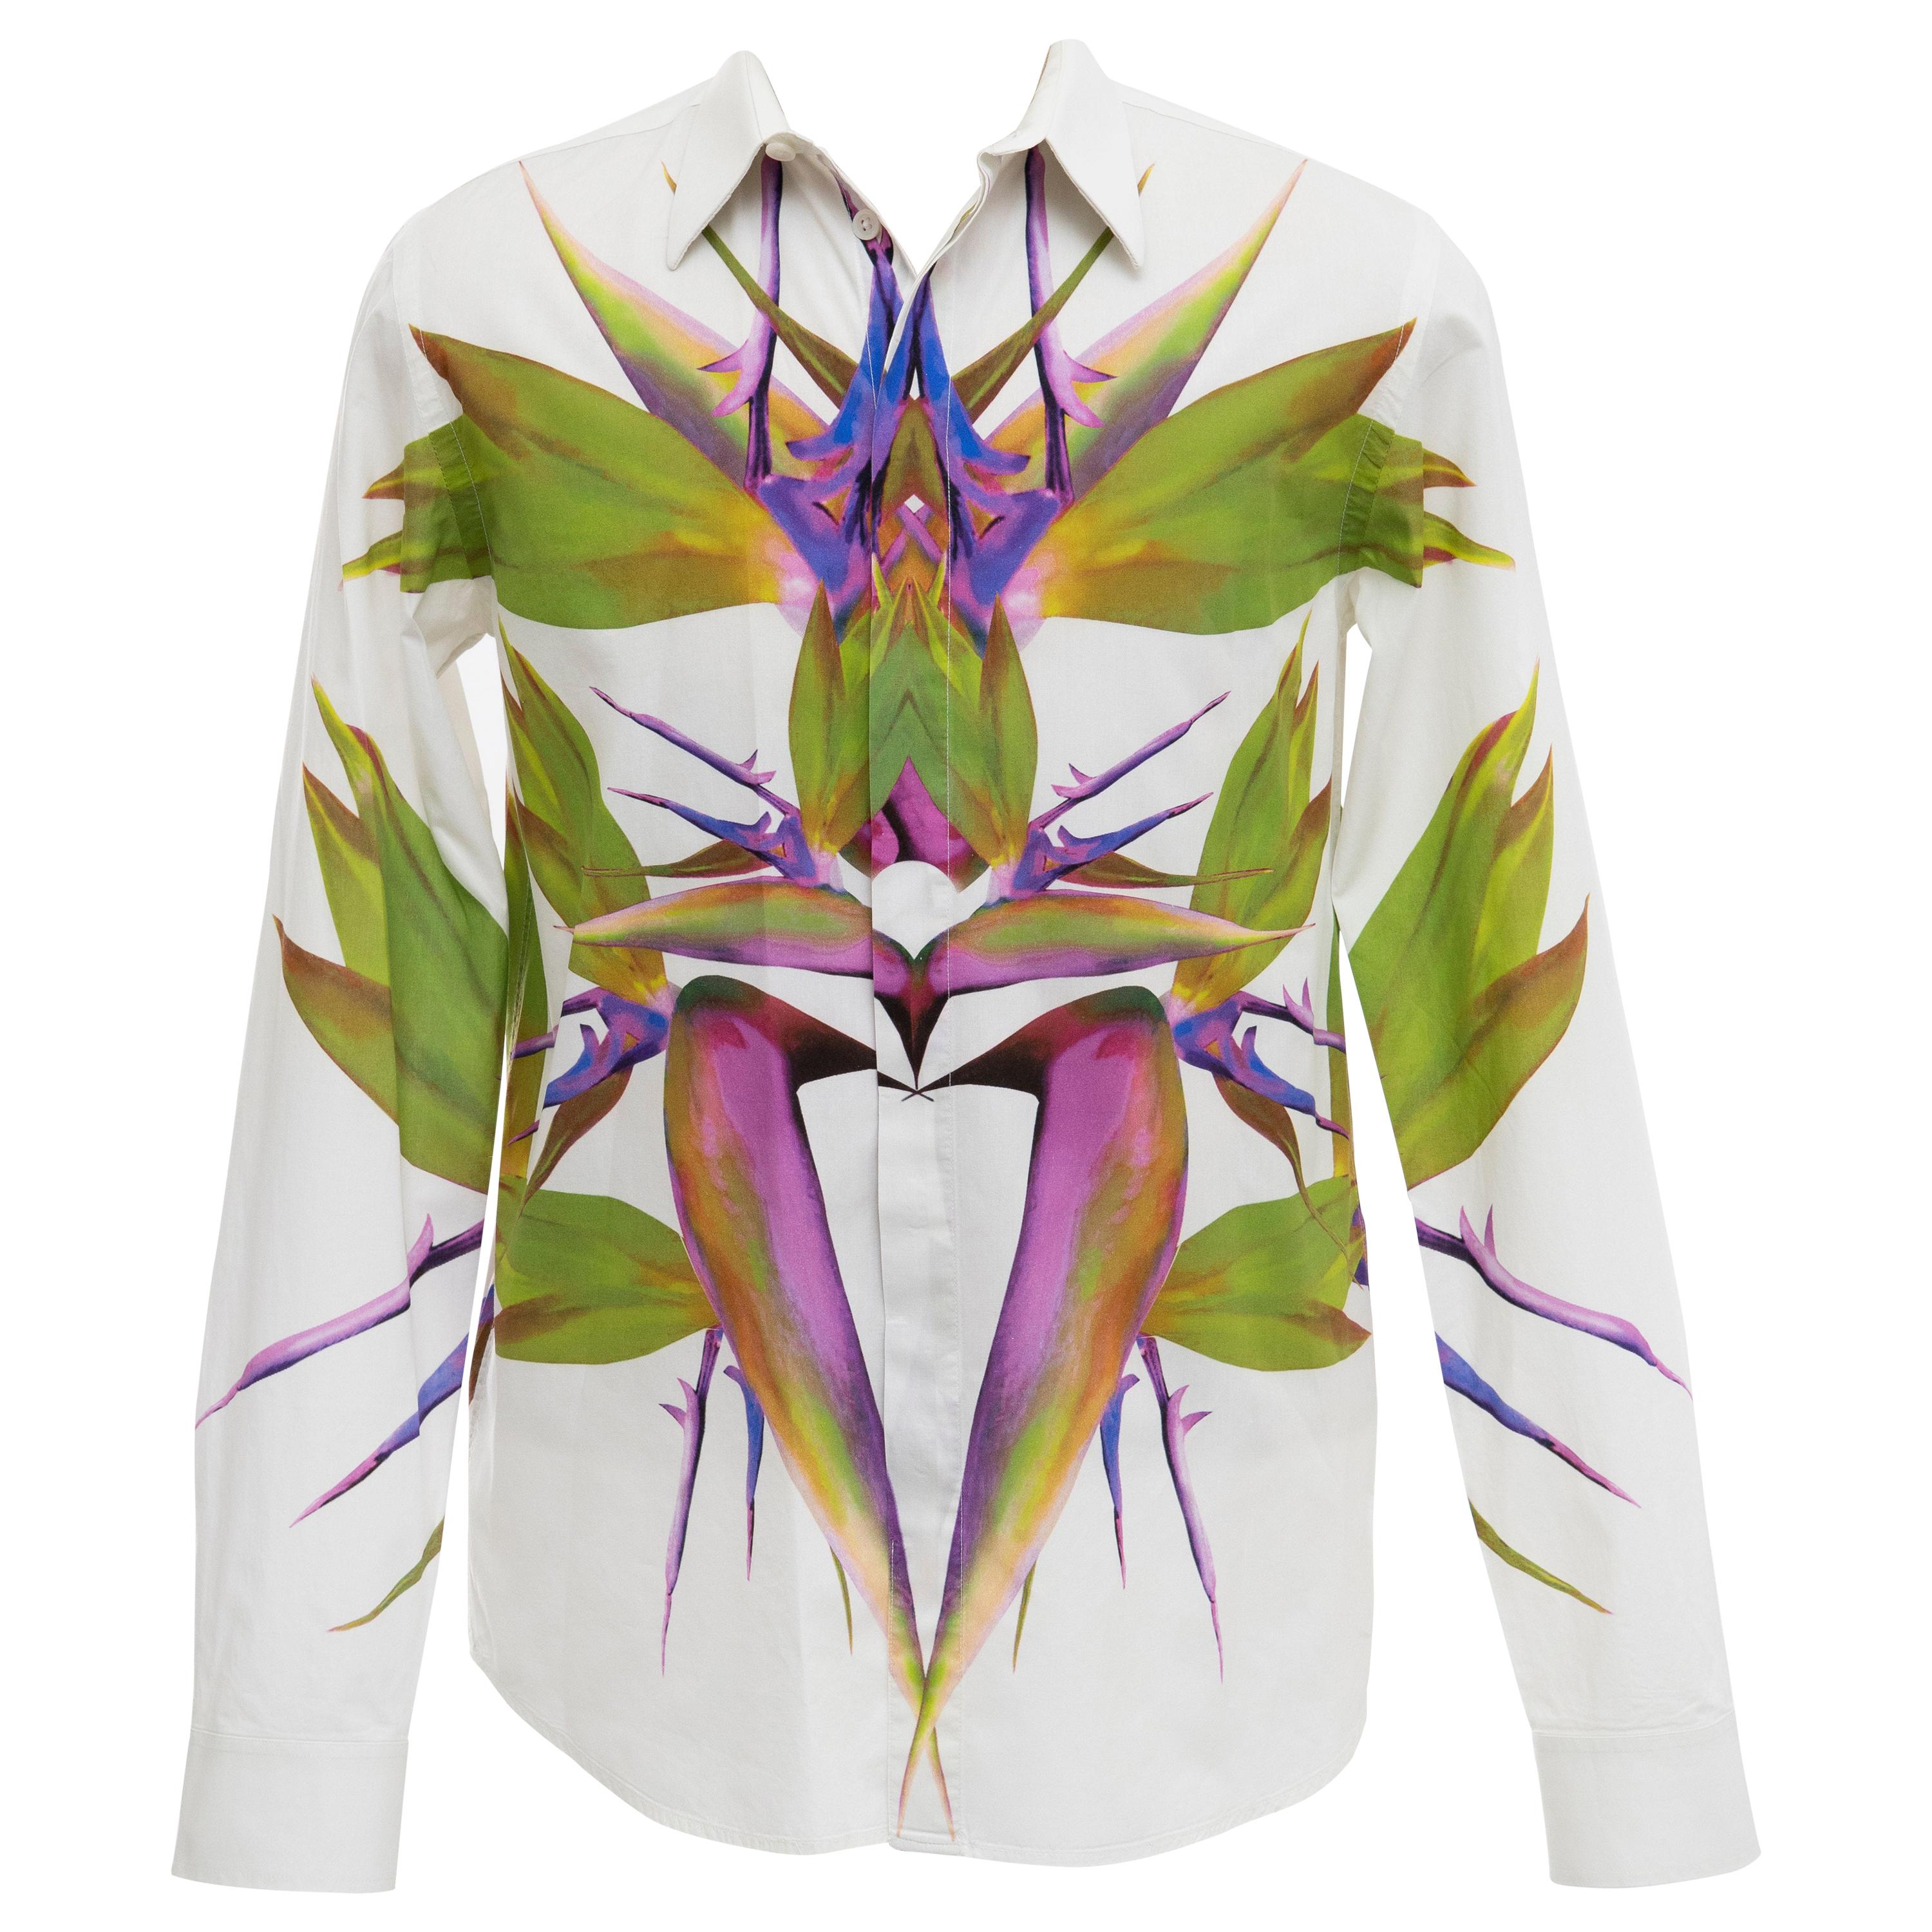 Riccardo Tisci for Givenchy Men's Cotton Birds of Paradise Shirt, Spring 2012